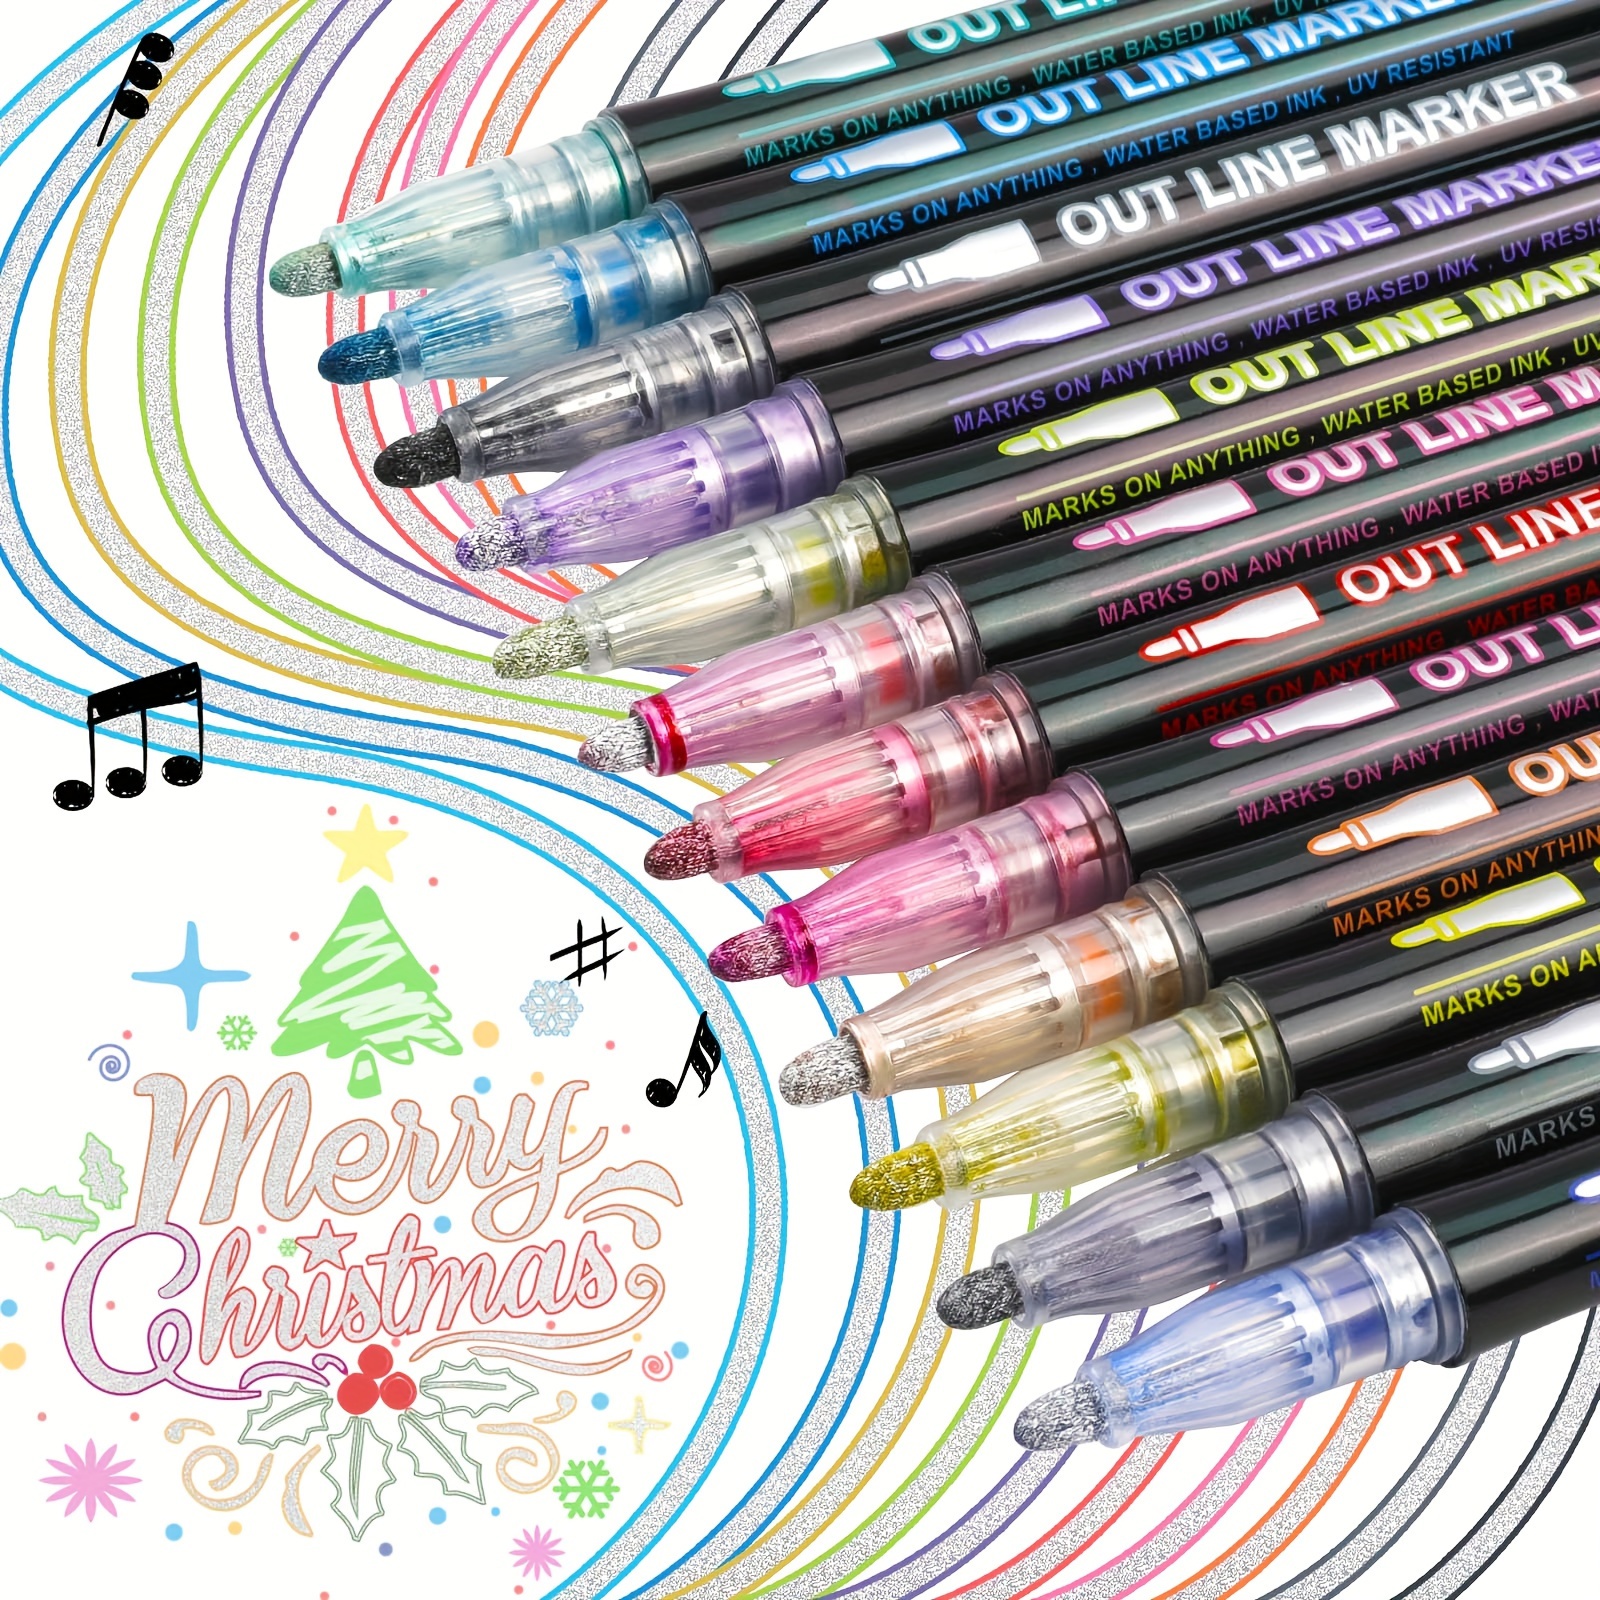 12/24 Colors Double Line Contour Pen Glitter Paint Markers Fancy Out Line  Markers Drawing